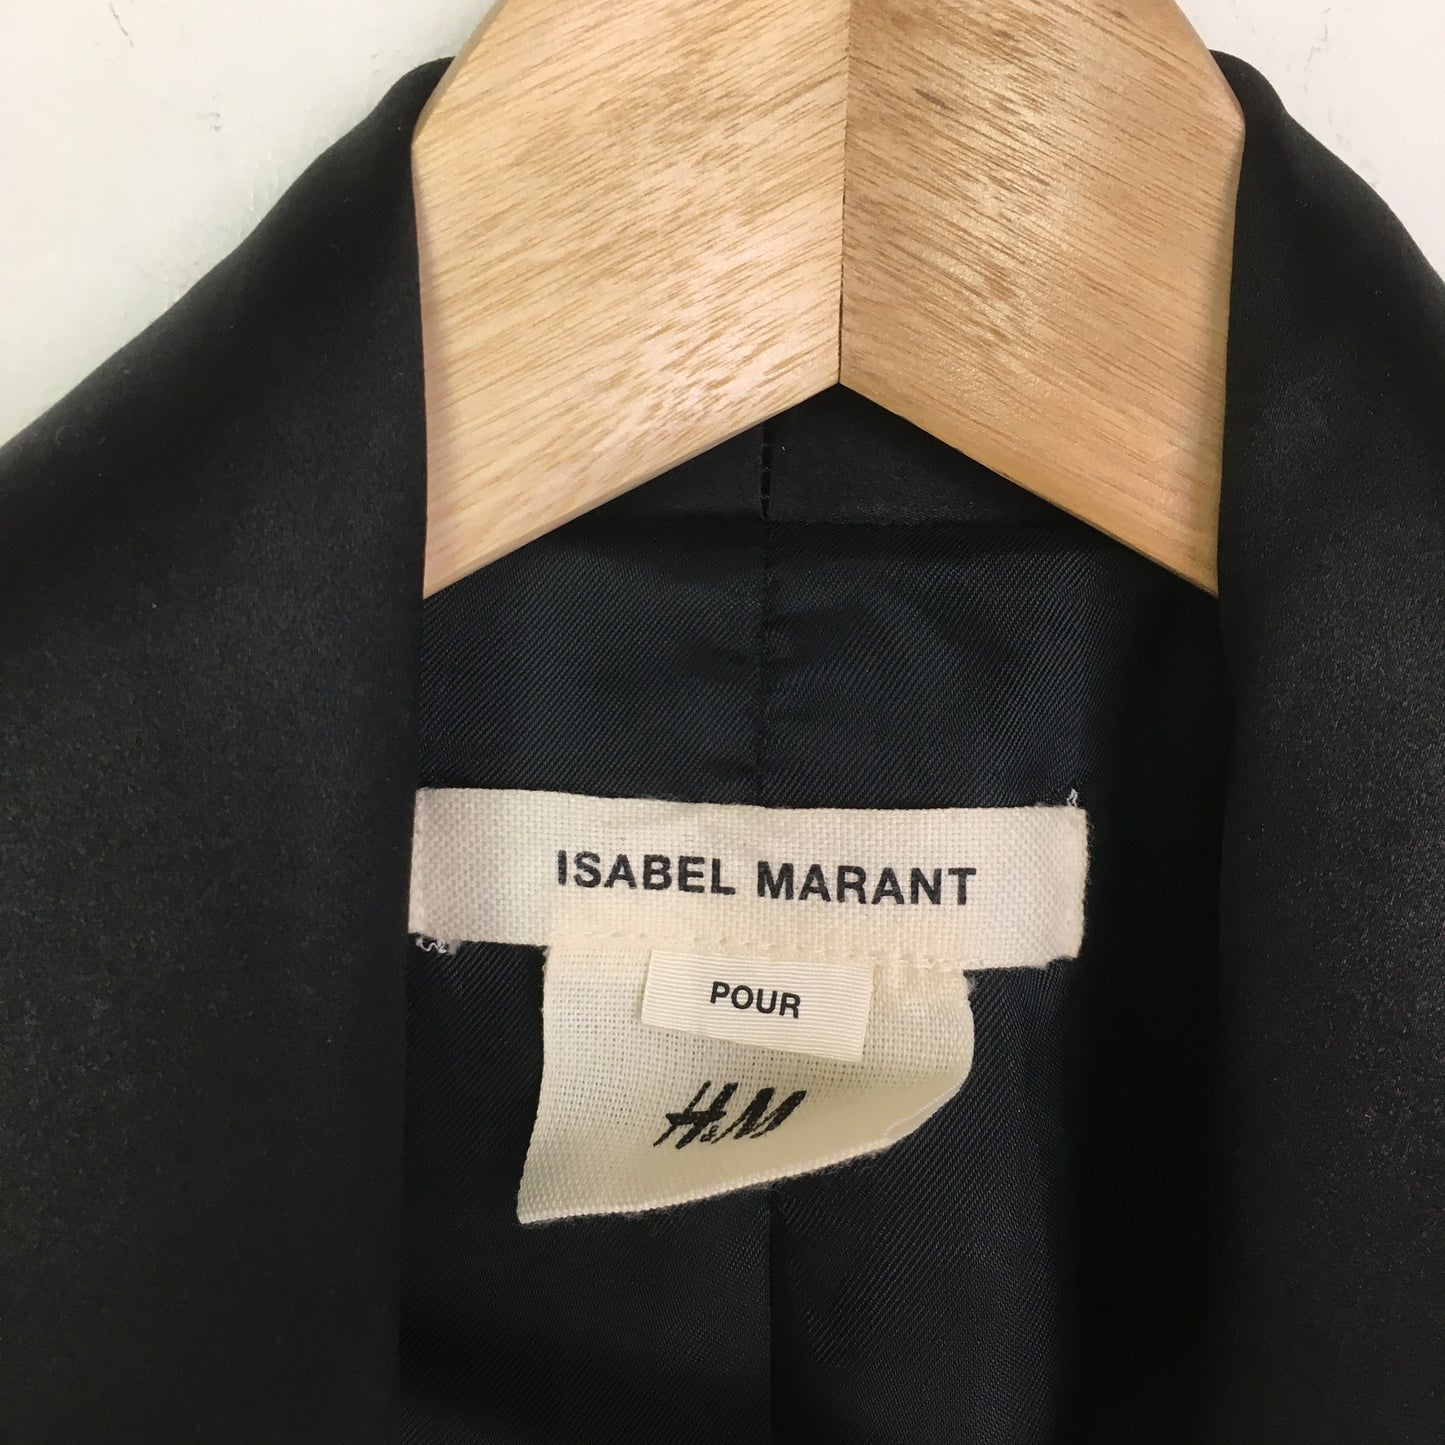 H&M x ISABEL MARANT Blazer | 36